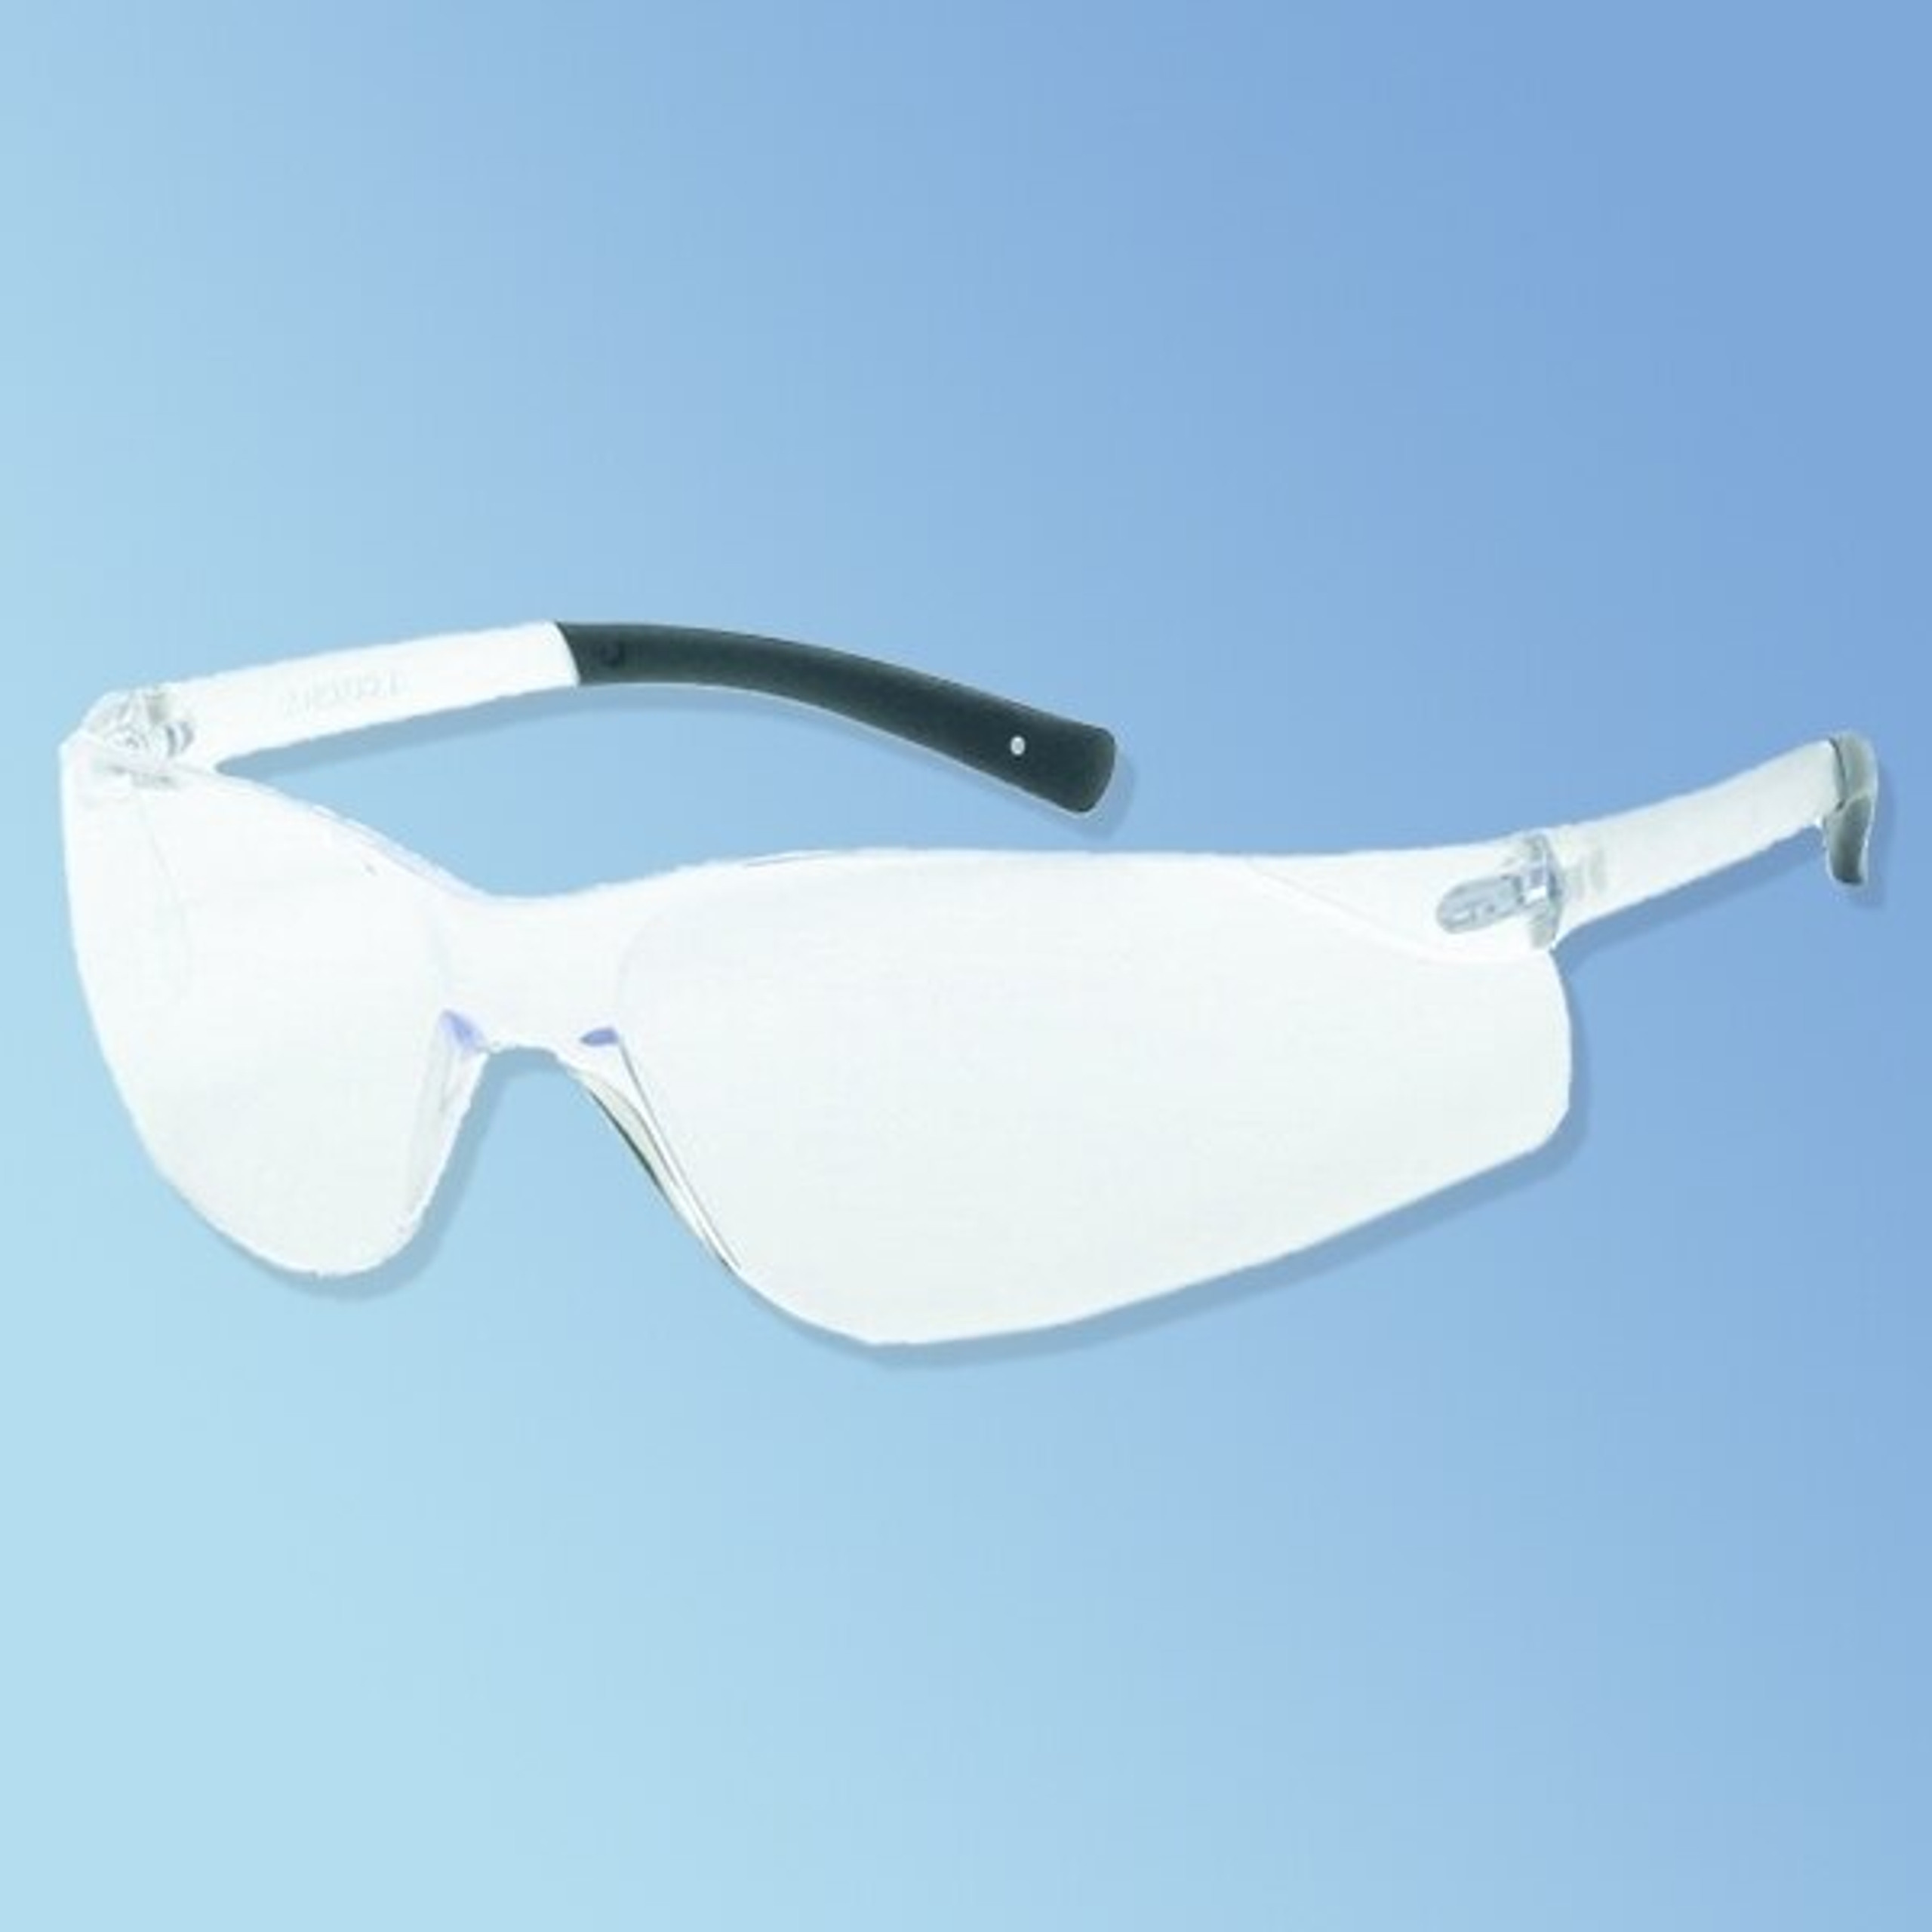 iNOX F-II Wrap-Around Safety Glasses